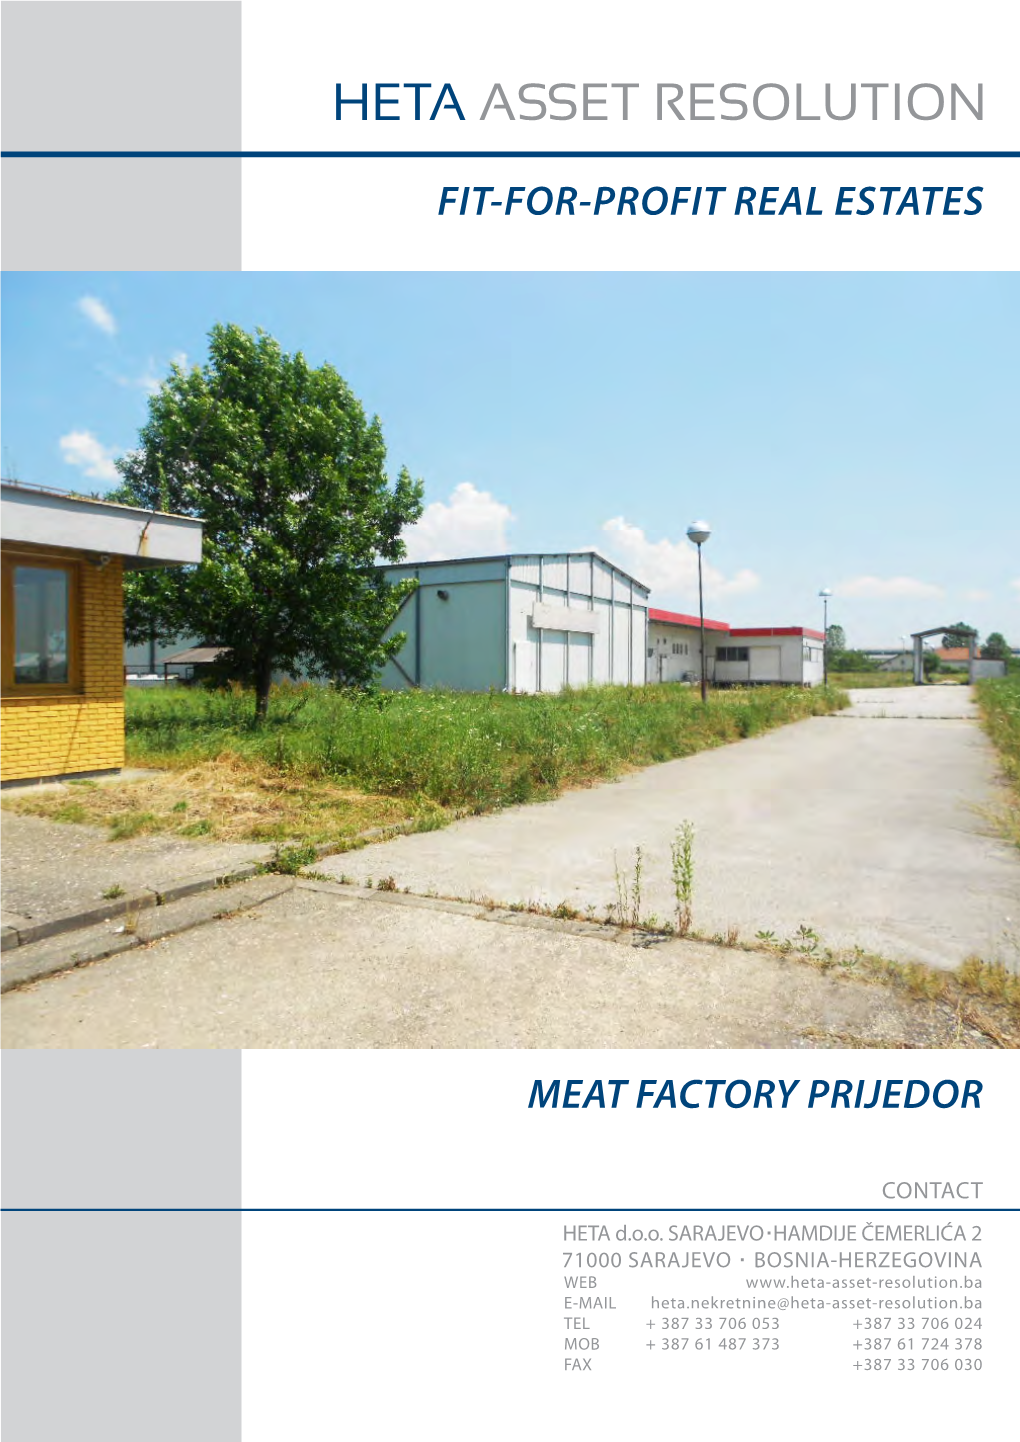 Meat Factory Prijedor Fit-For-Profit Real Estates